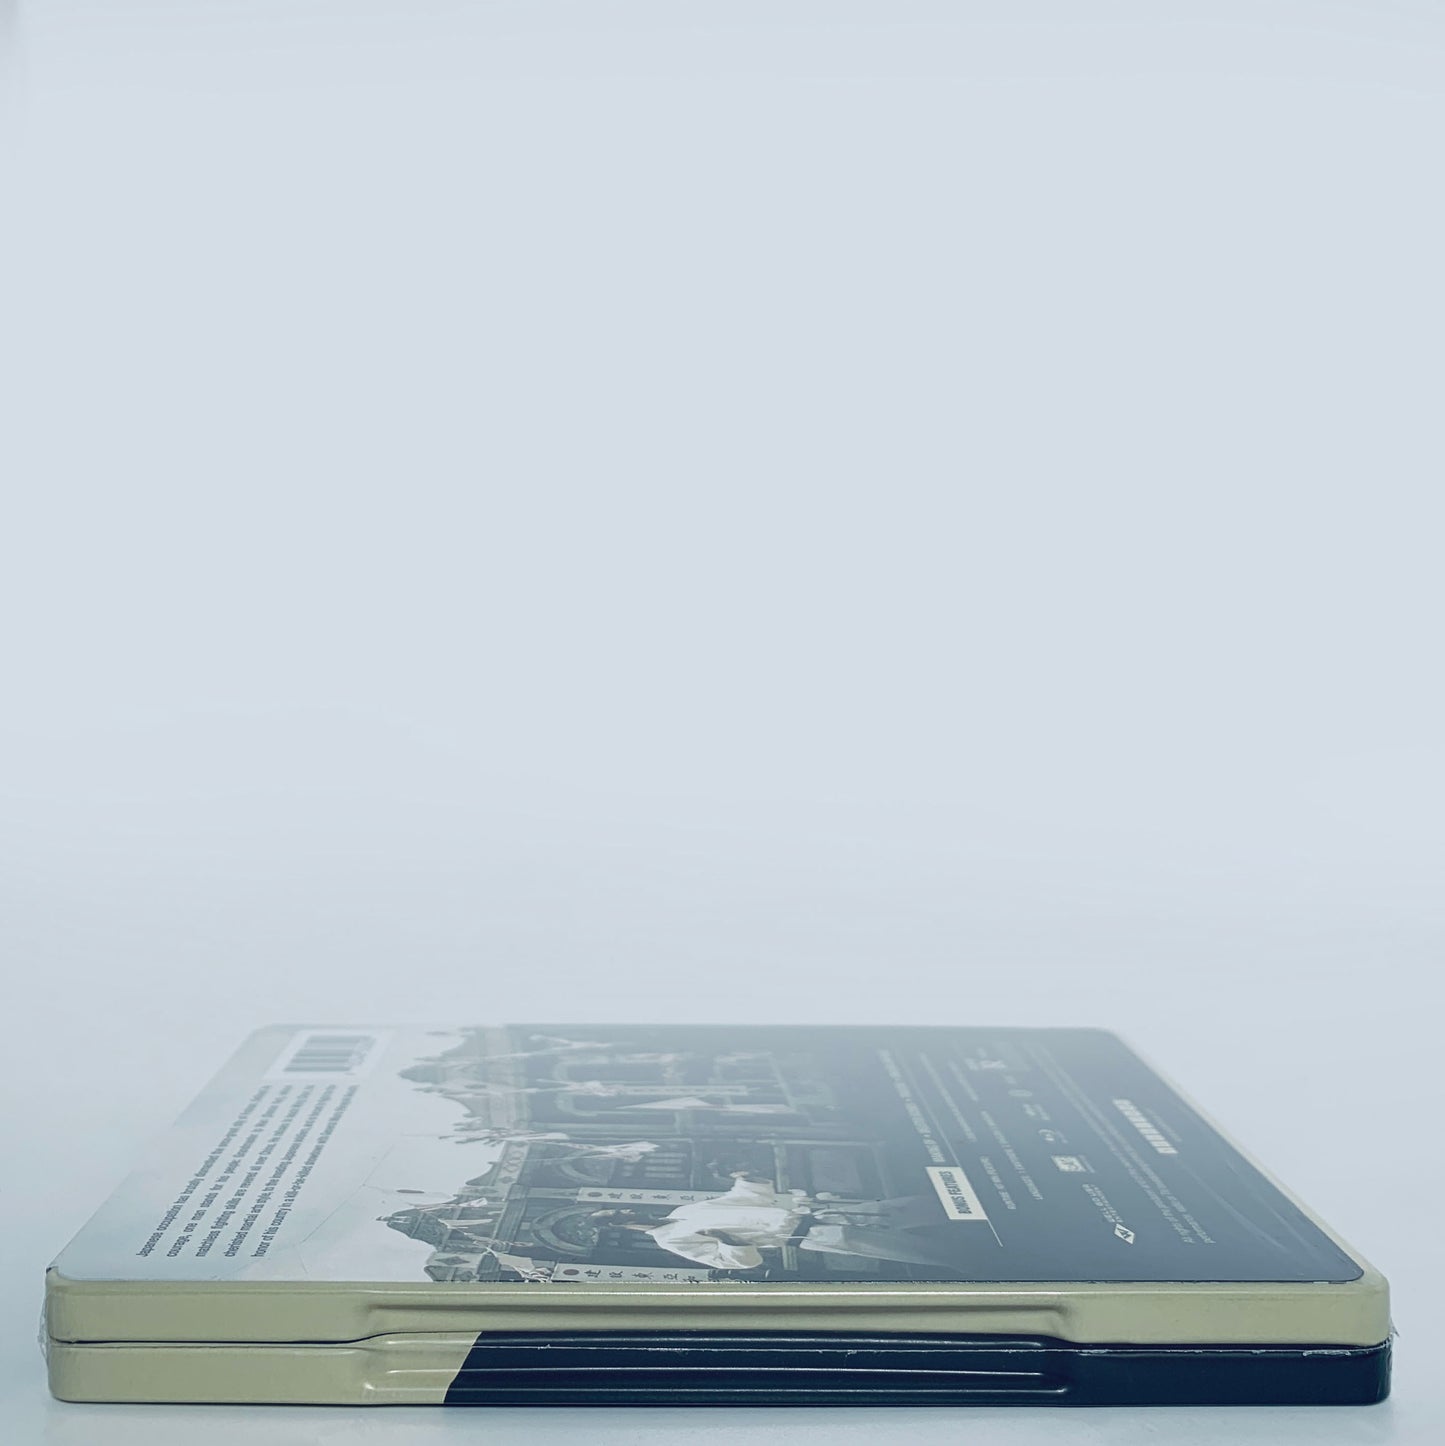 Ip Man Donnie Yen Limited Edition Blu-ray SteelBook Steel Book Bruce Lee Simon Yam